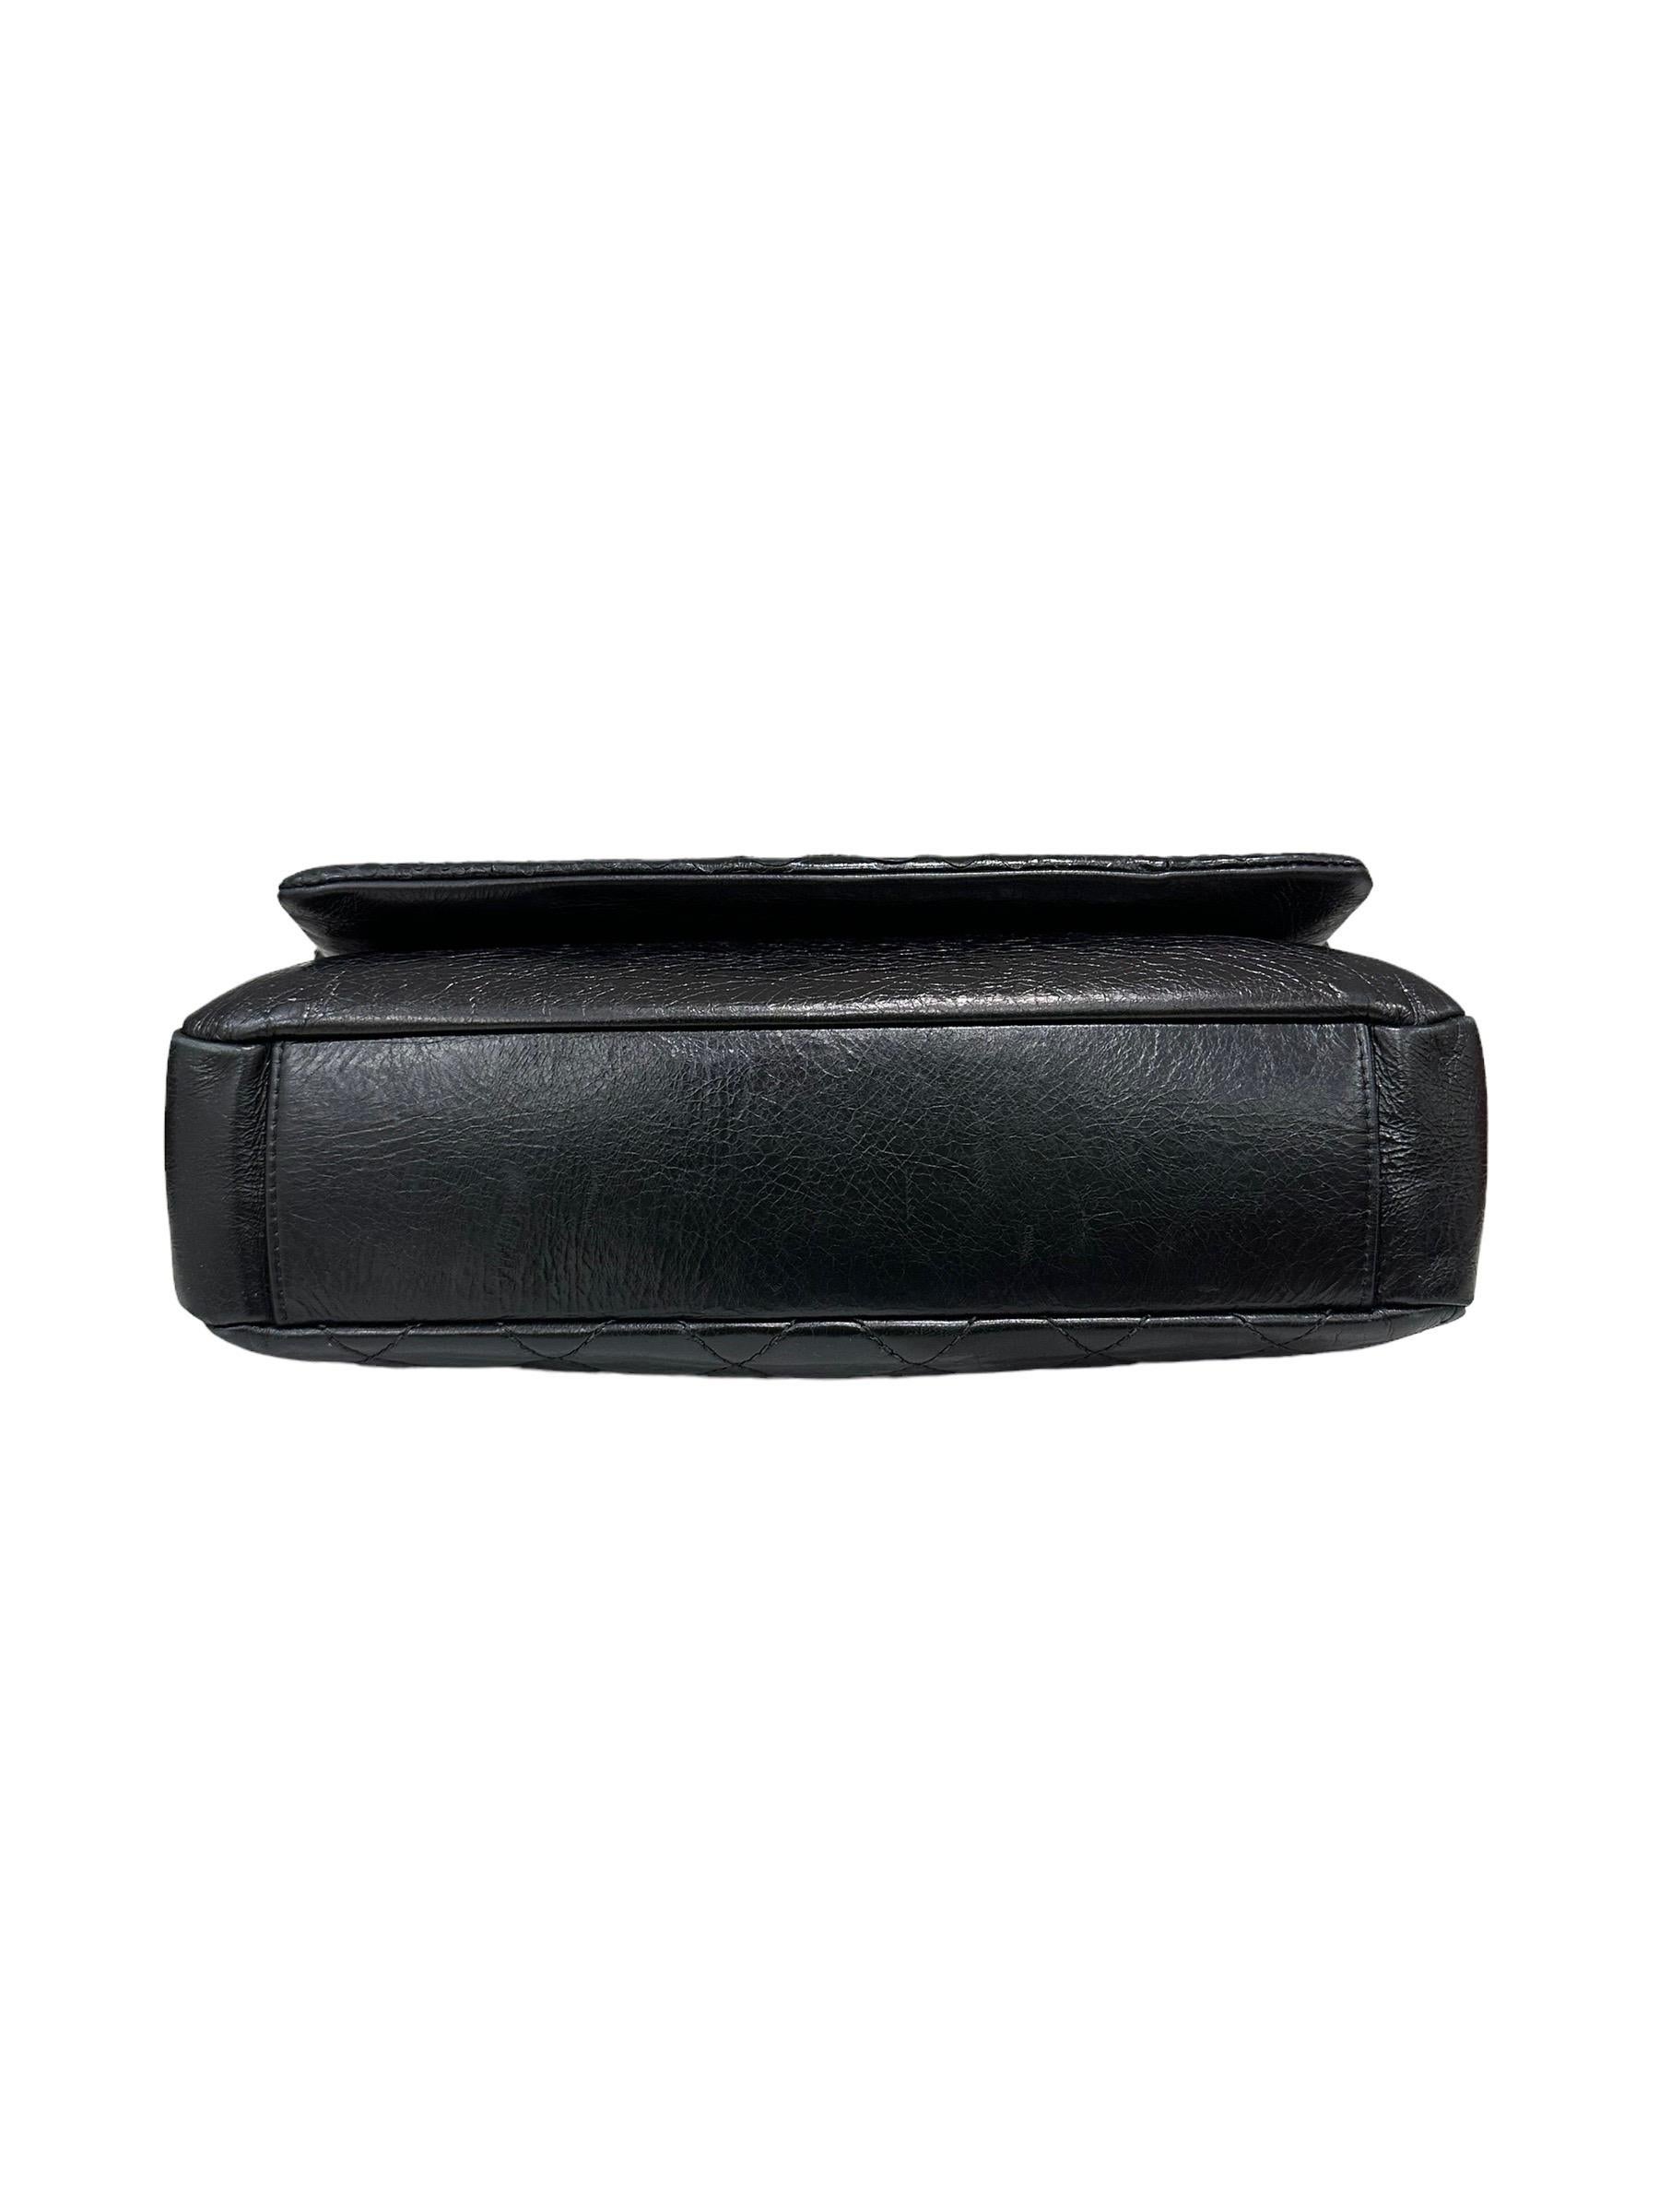 2016 Chanel Urban Mix  Flap Black Quilted Leather Shoulder Bag For Sale 3